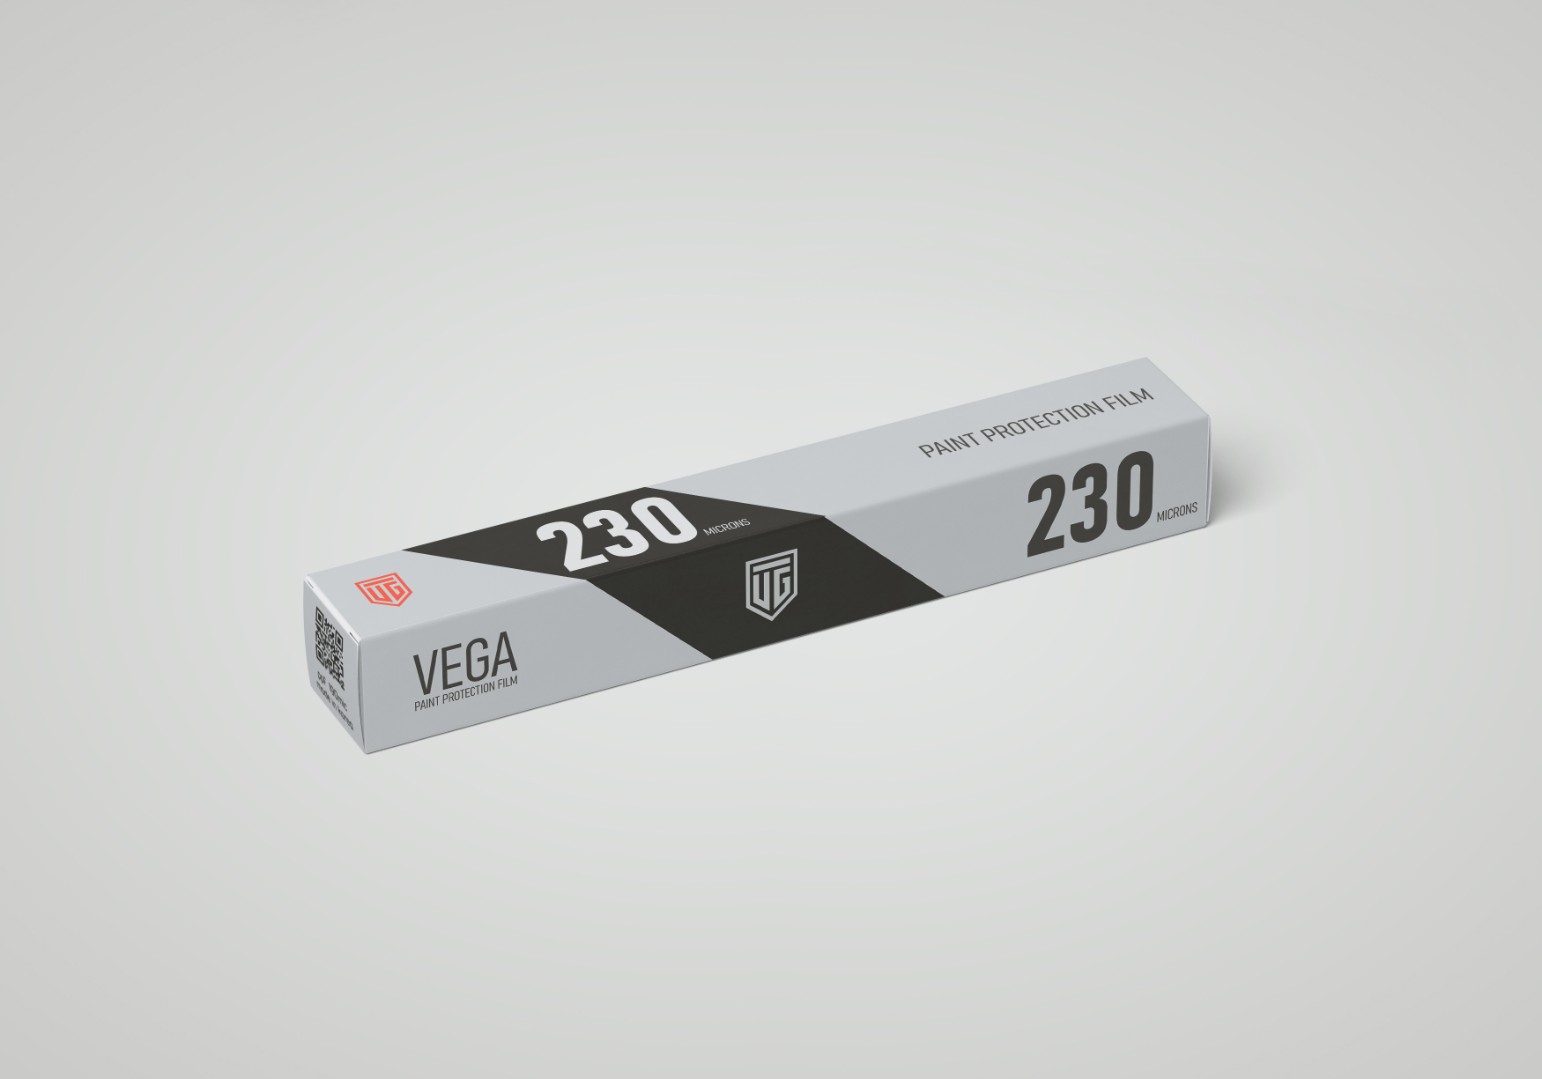 VEGA 230 HT series